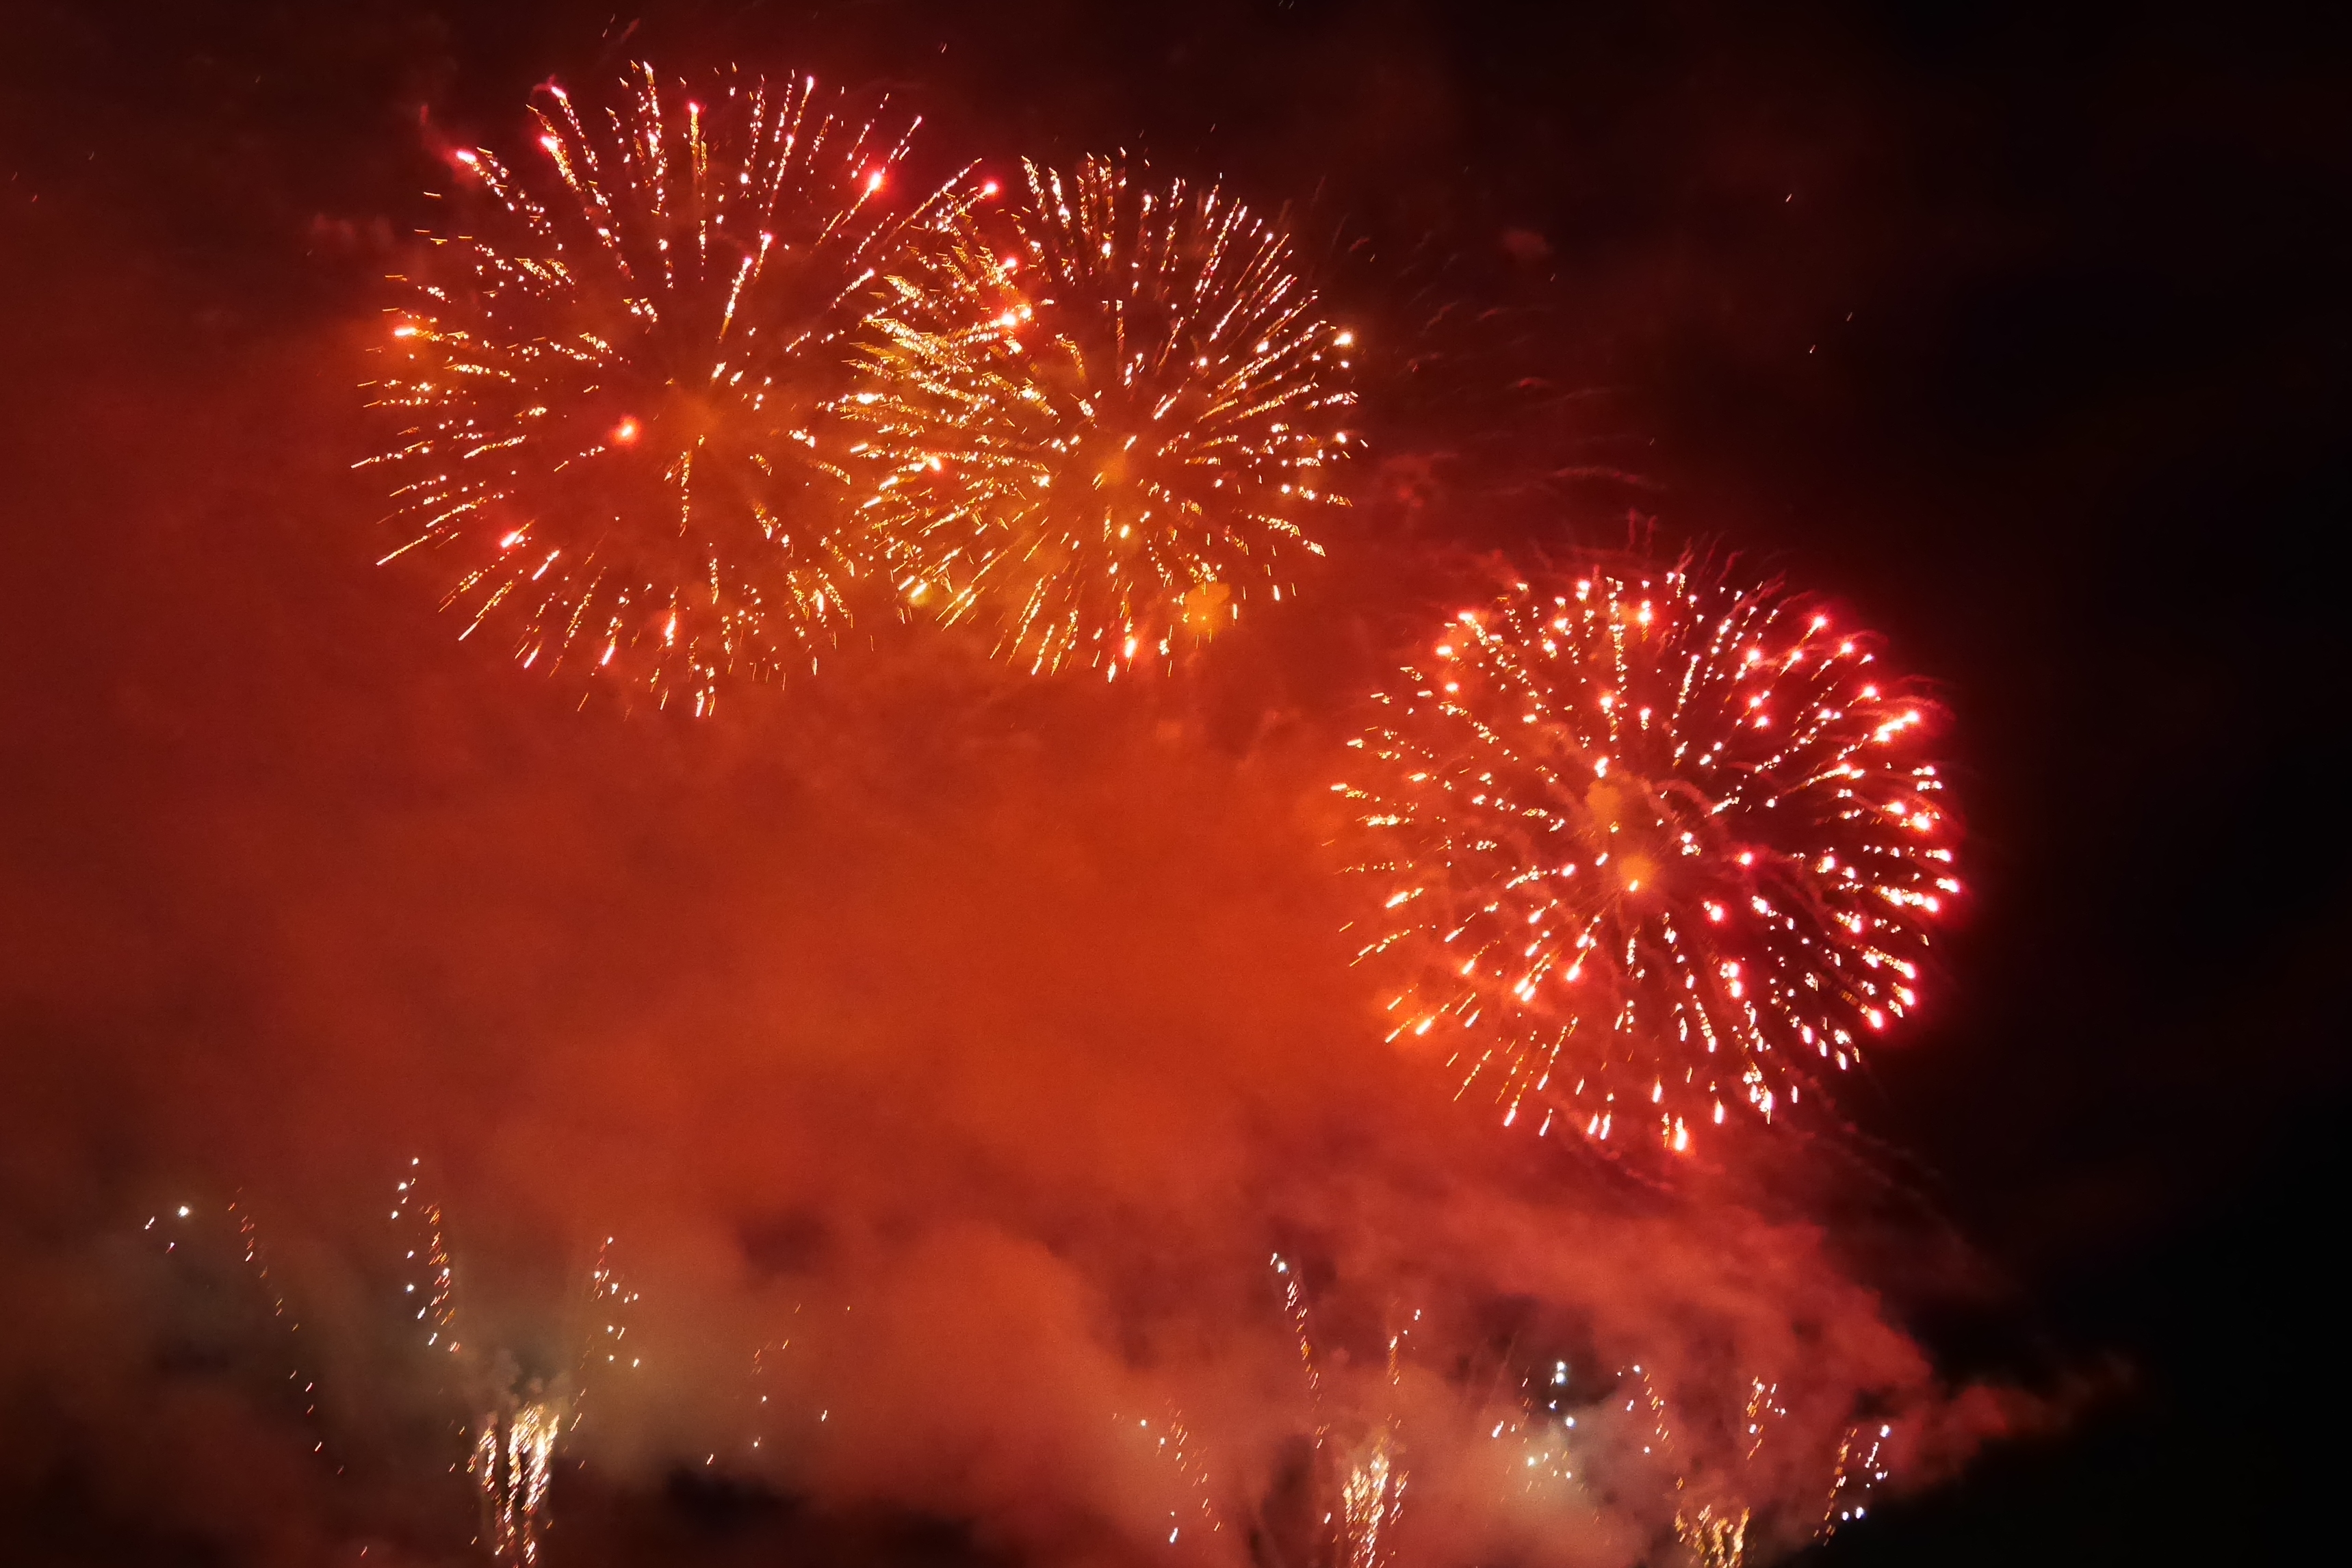 konstanz_seenachtfest16_fireworks